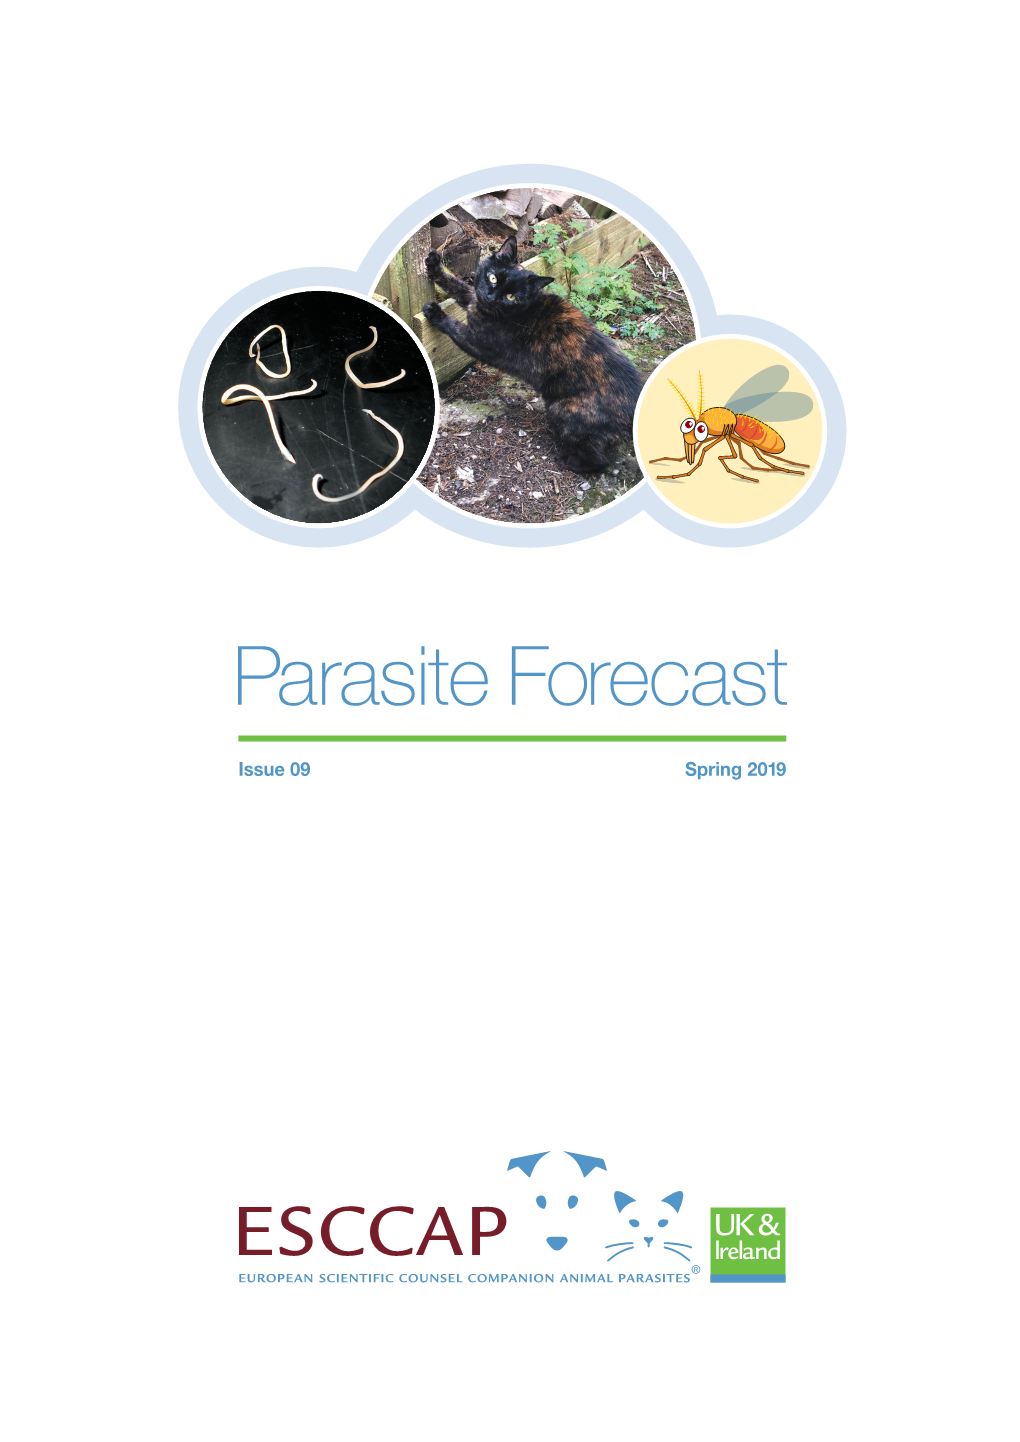 Spring 2019 Parasite Forecast Welcome to the ESCCAP UK & Ireland Quarterly Newsletter